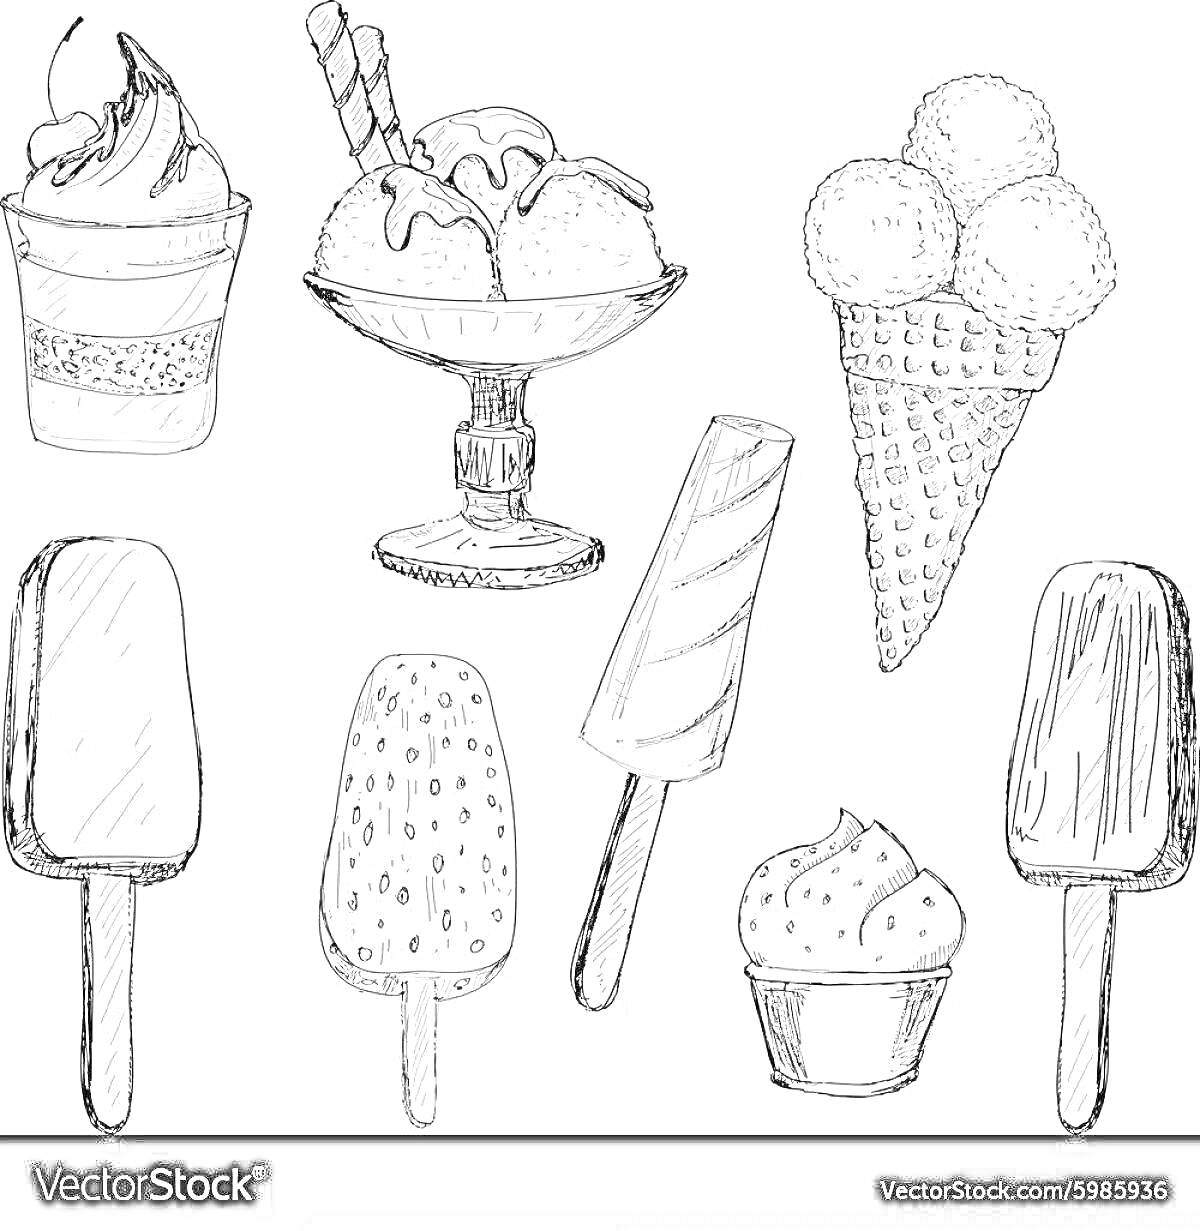 На раскраске изображено: Мороженое, Эскимо, Посыпка, Крем, Ретро, Рожки, Скетчбук, Чашки